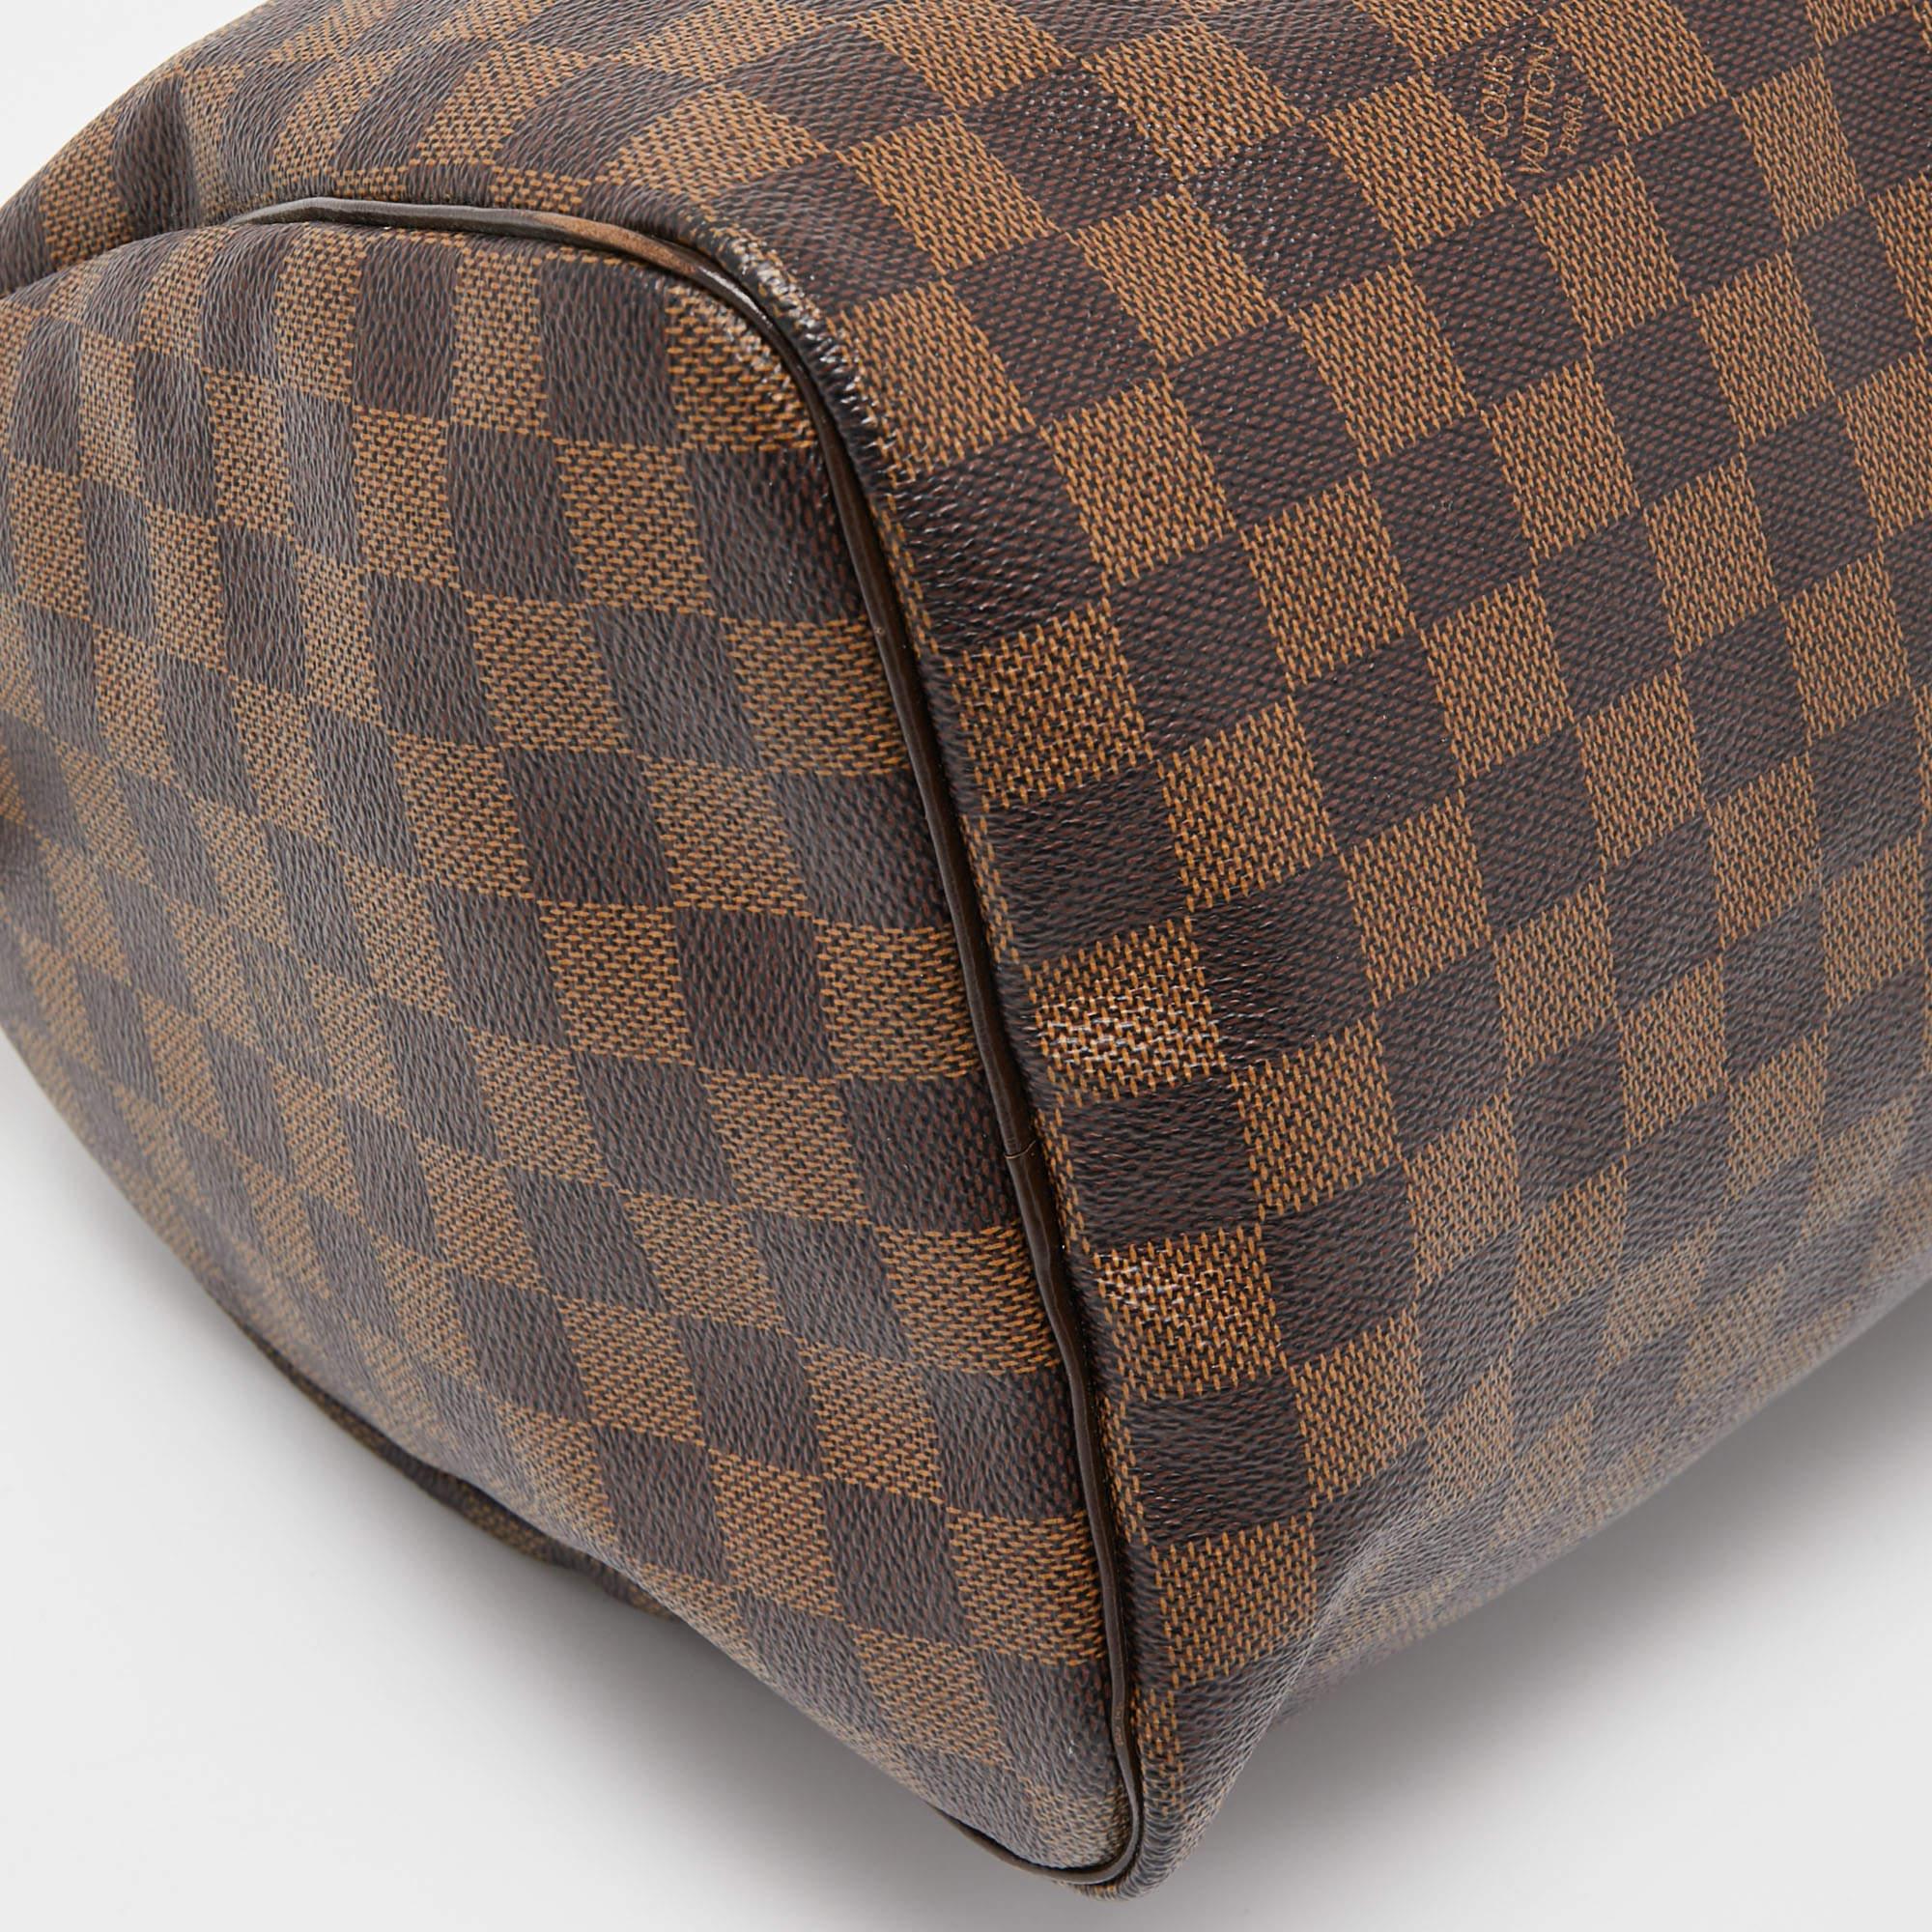 Louis Vuitton Damier Ebene Canvas Speedy 35 Bag 3